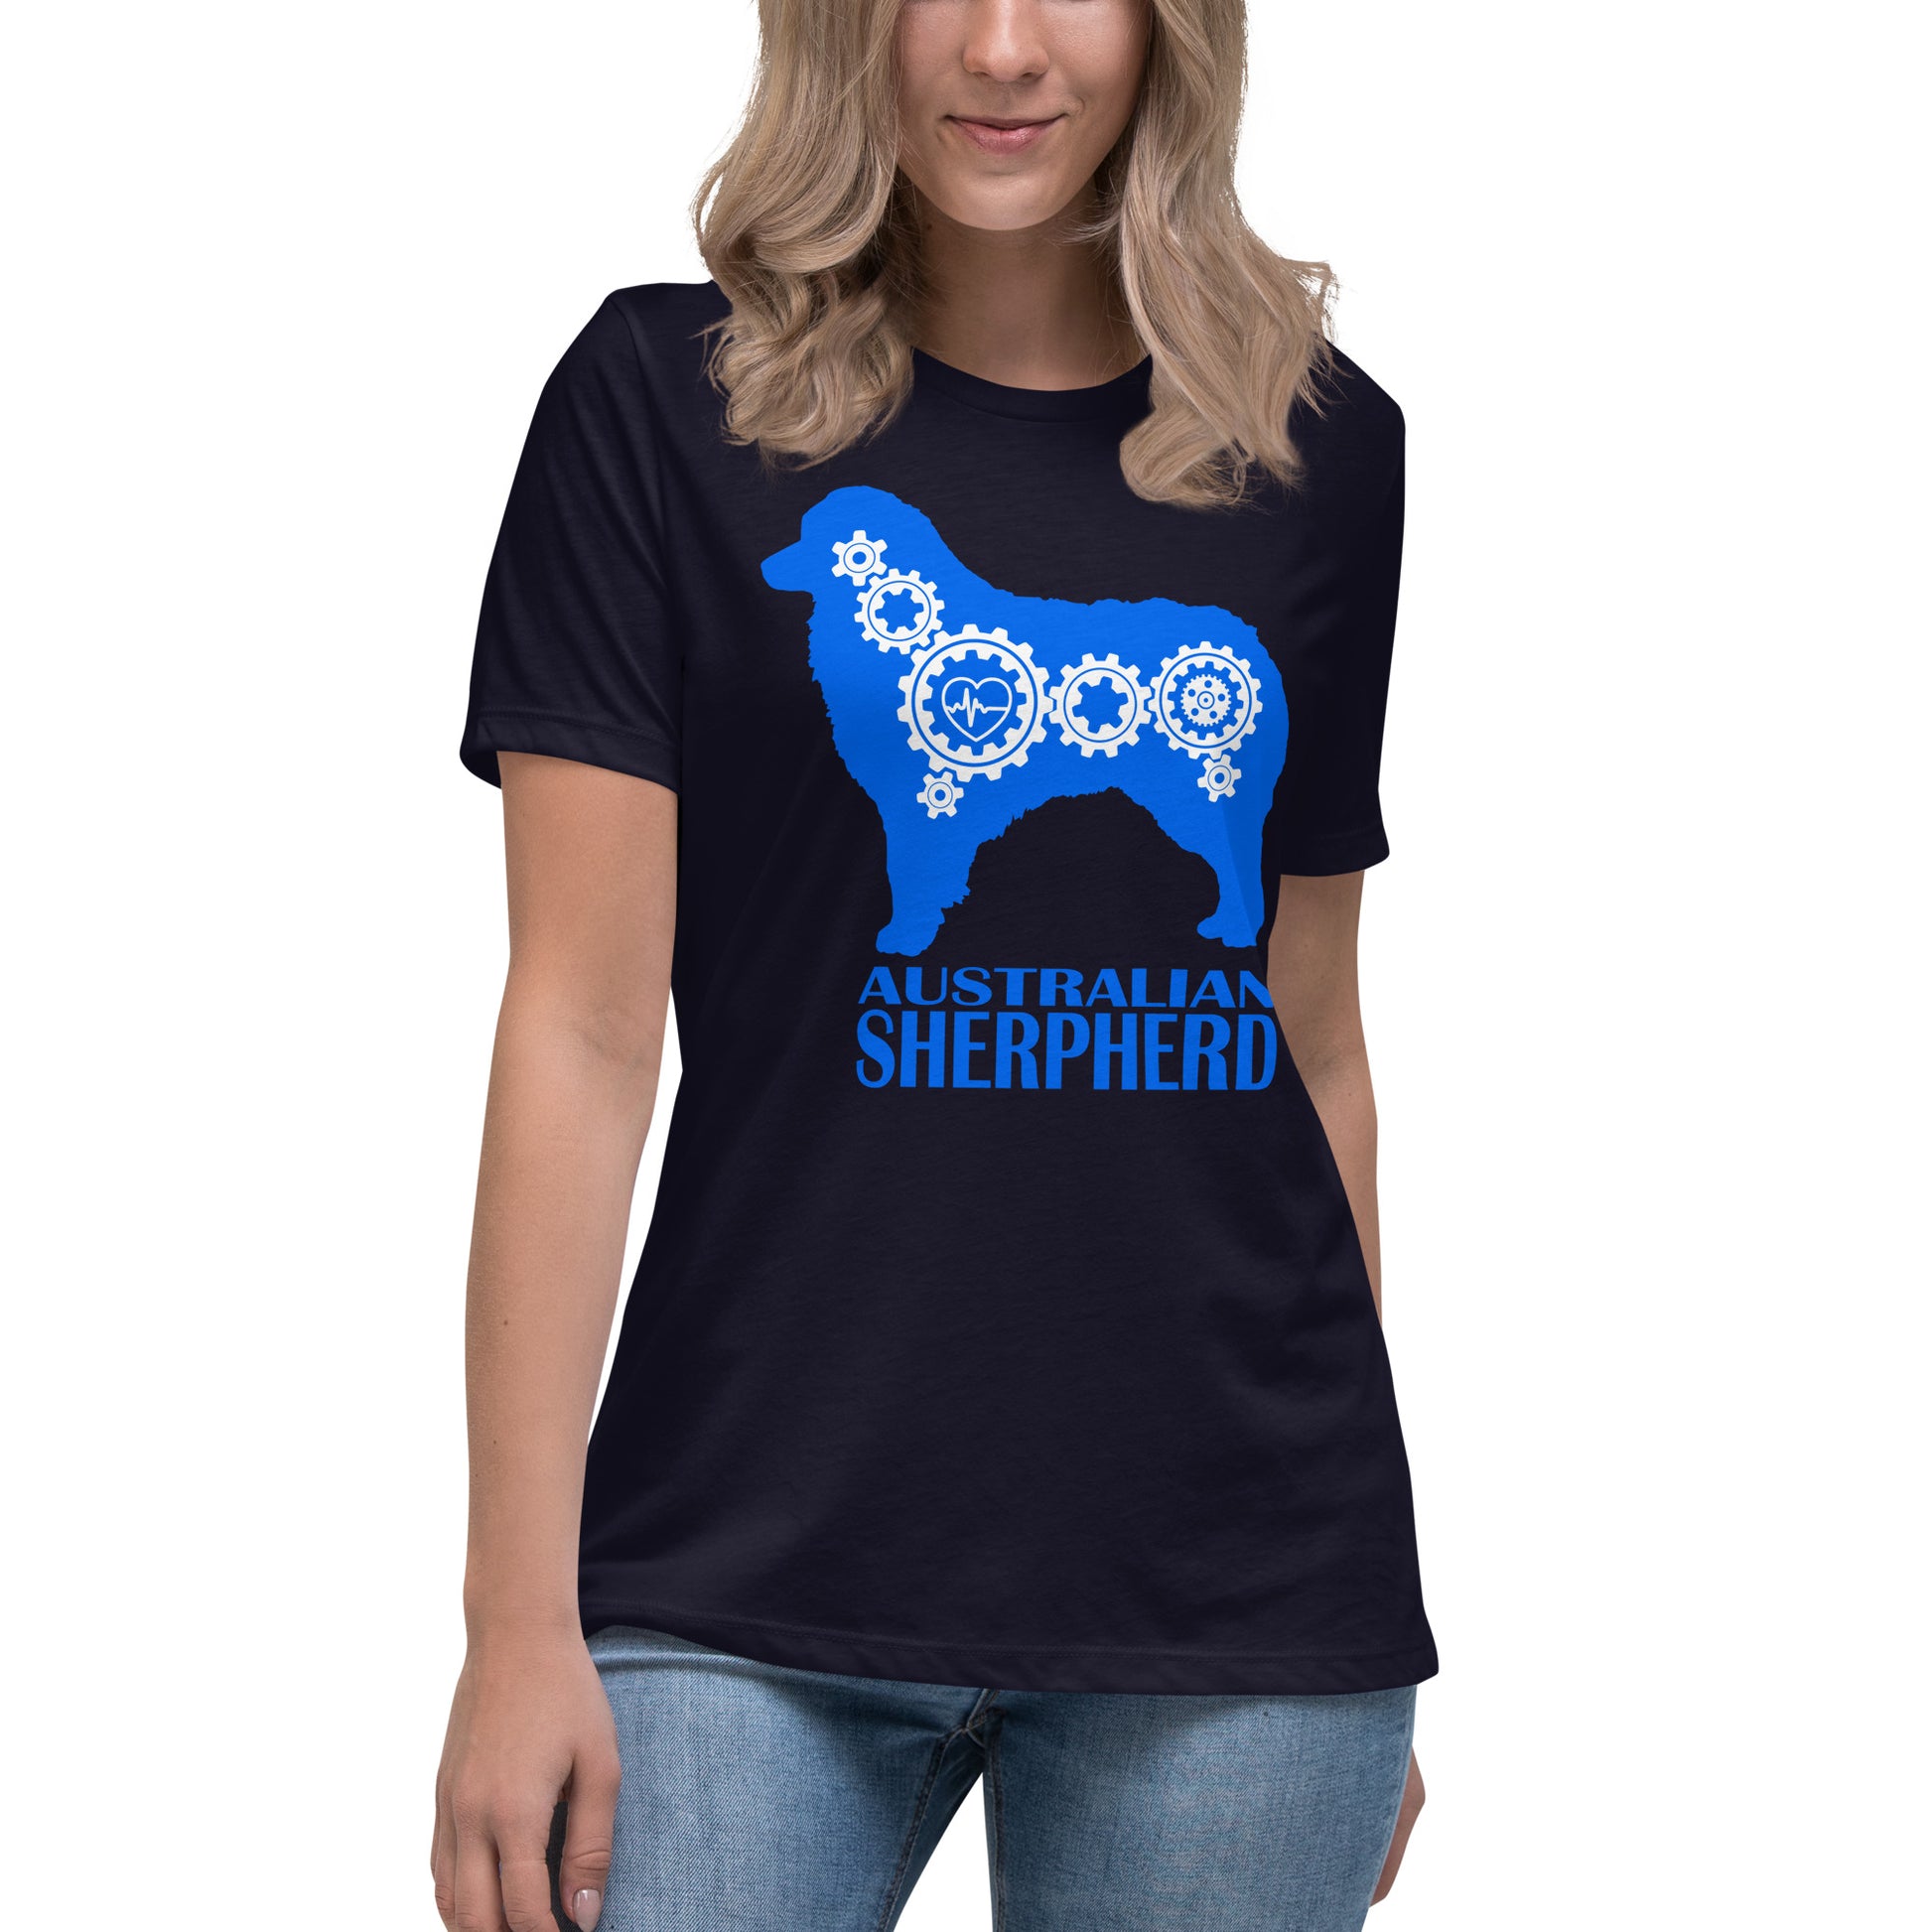 Australian Shepherd Bionic women’s navy t-shirt by Dog Artistry.